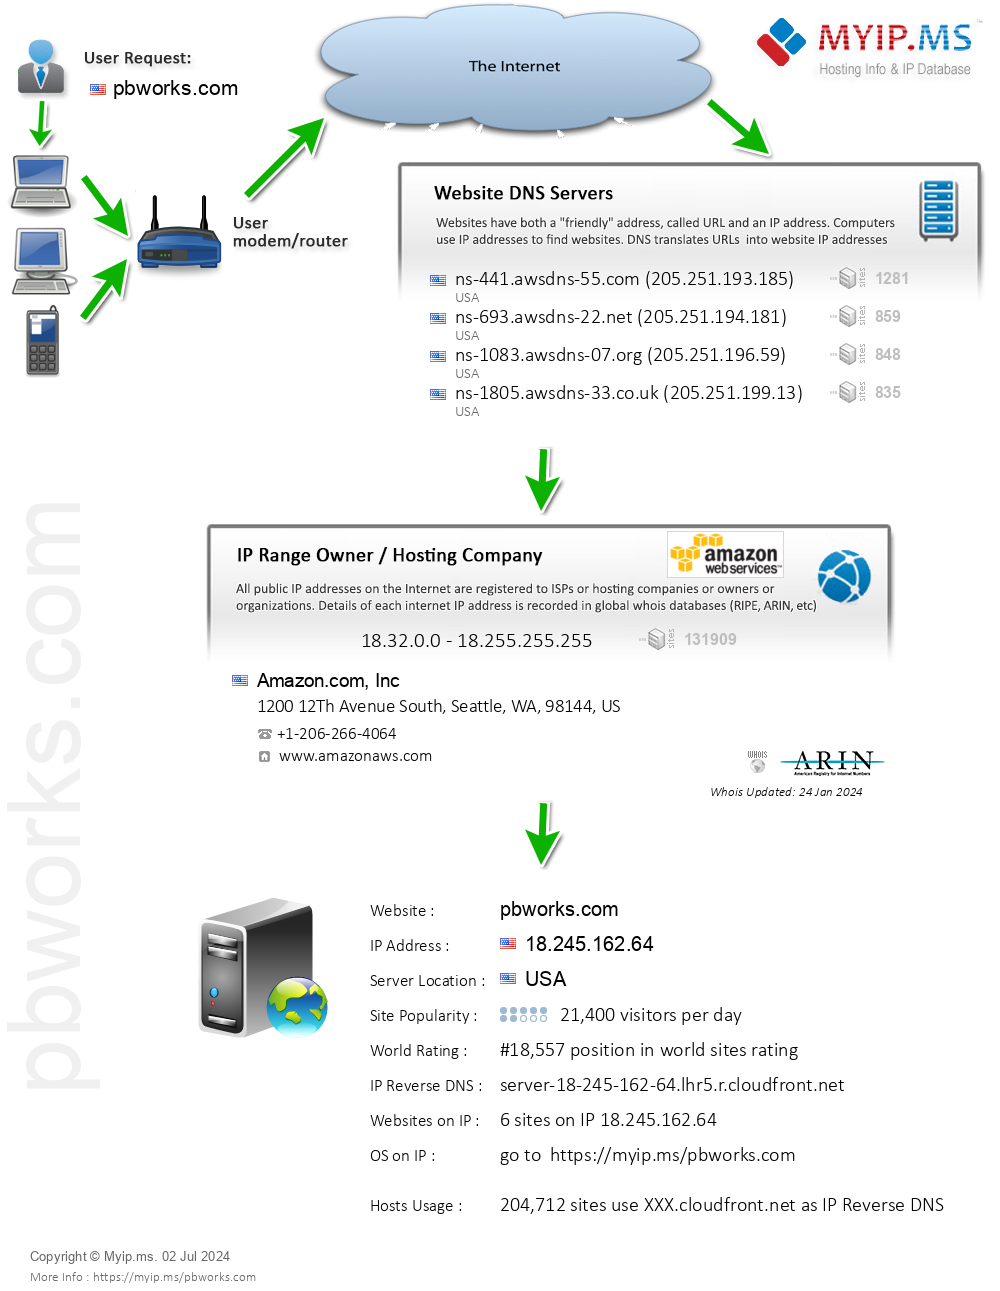 Pbworks.com - Website Hosting Visual IP Diagram